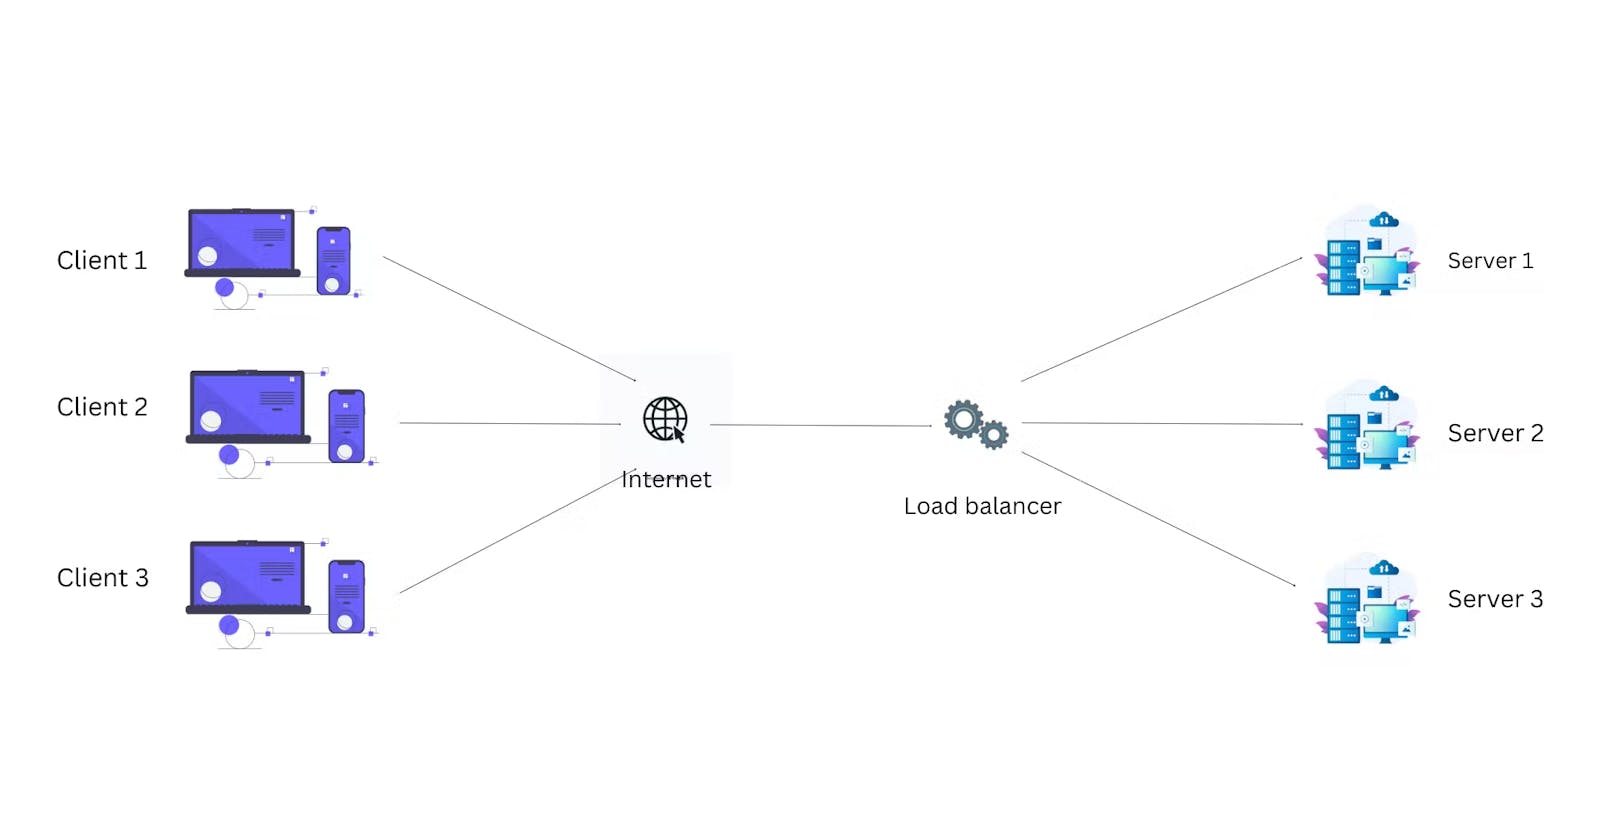 Some methods of load balancing